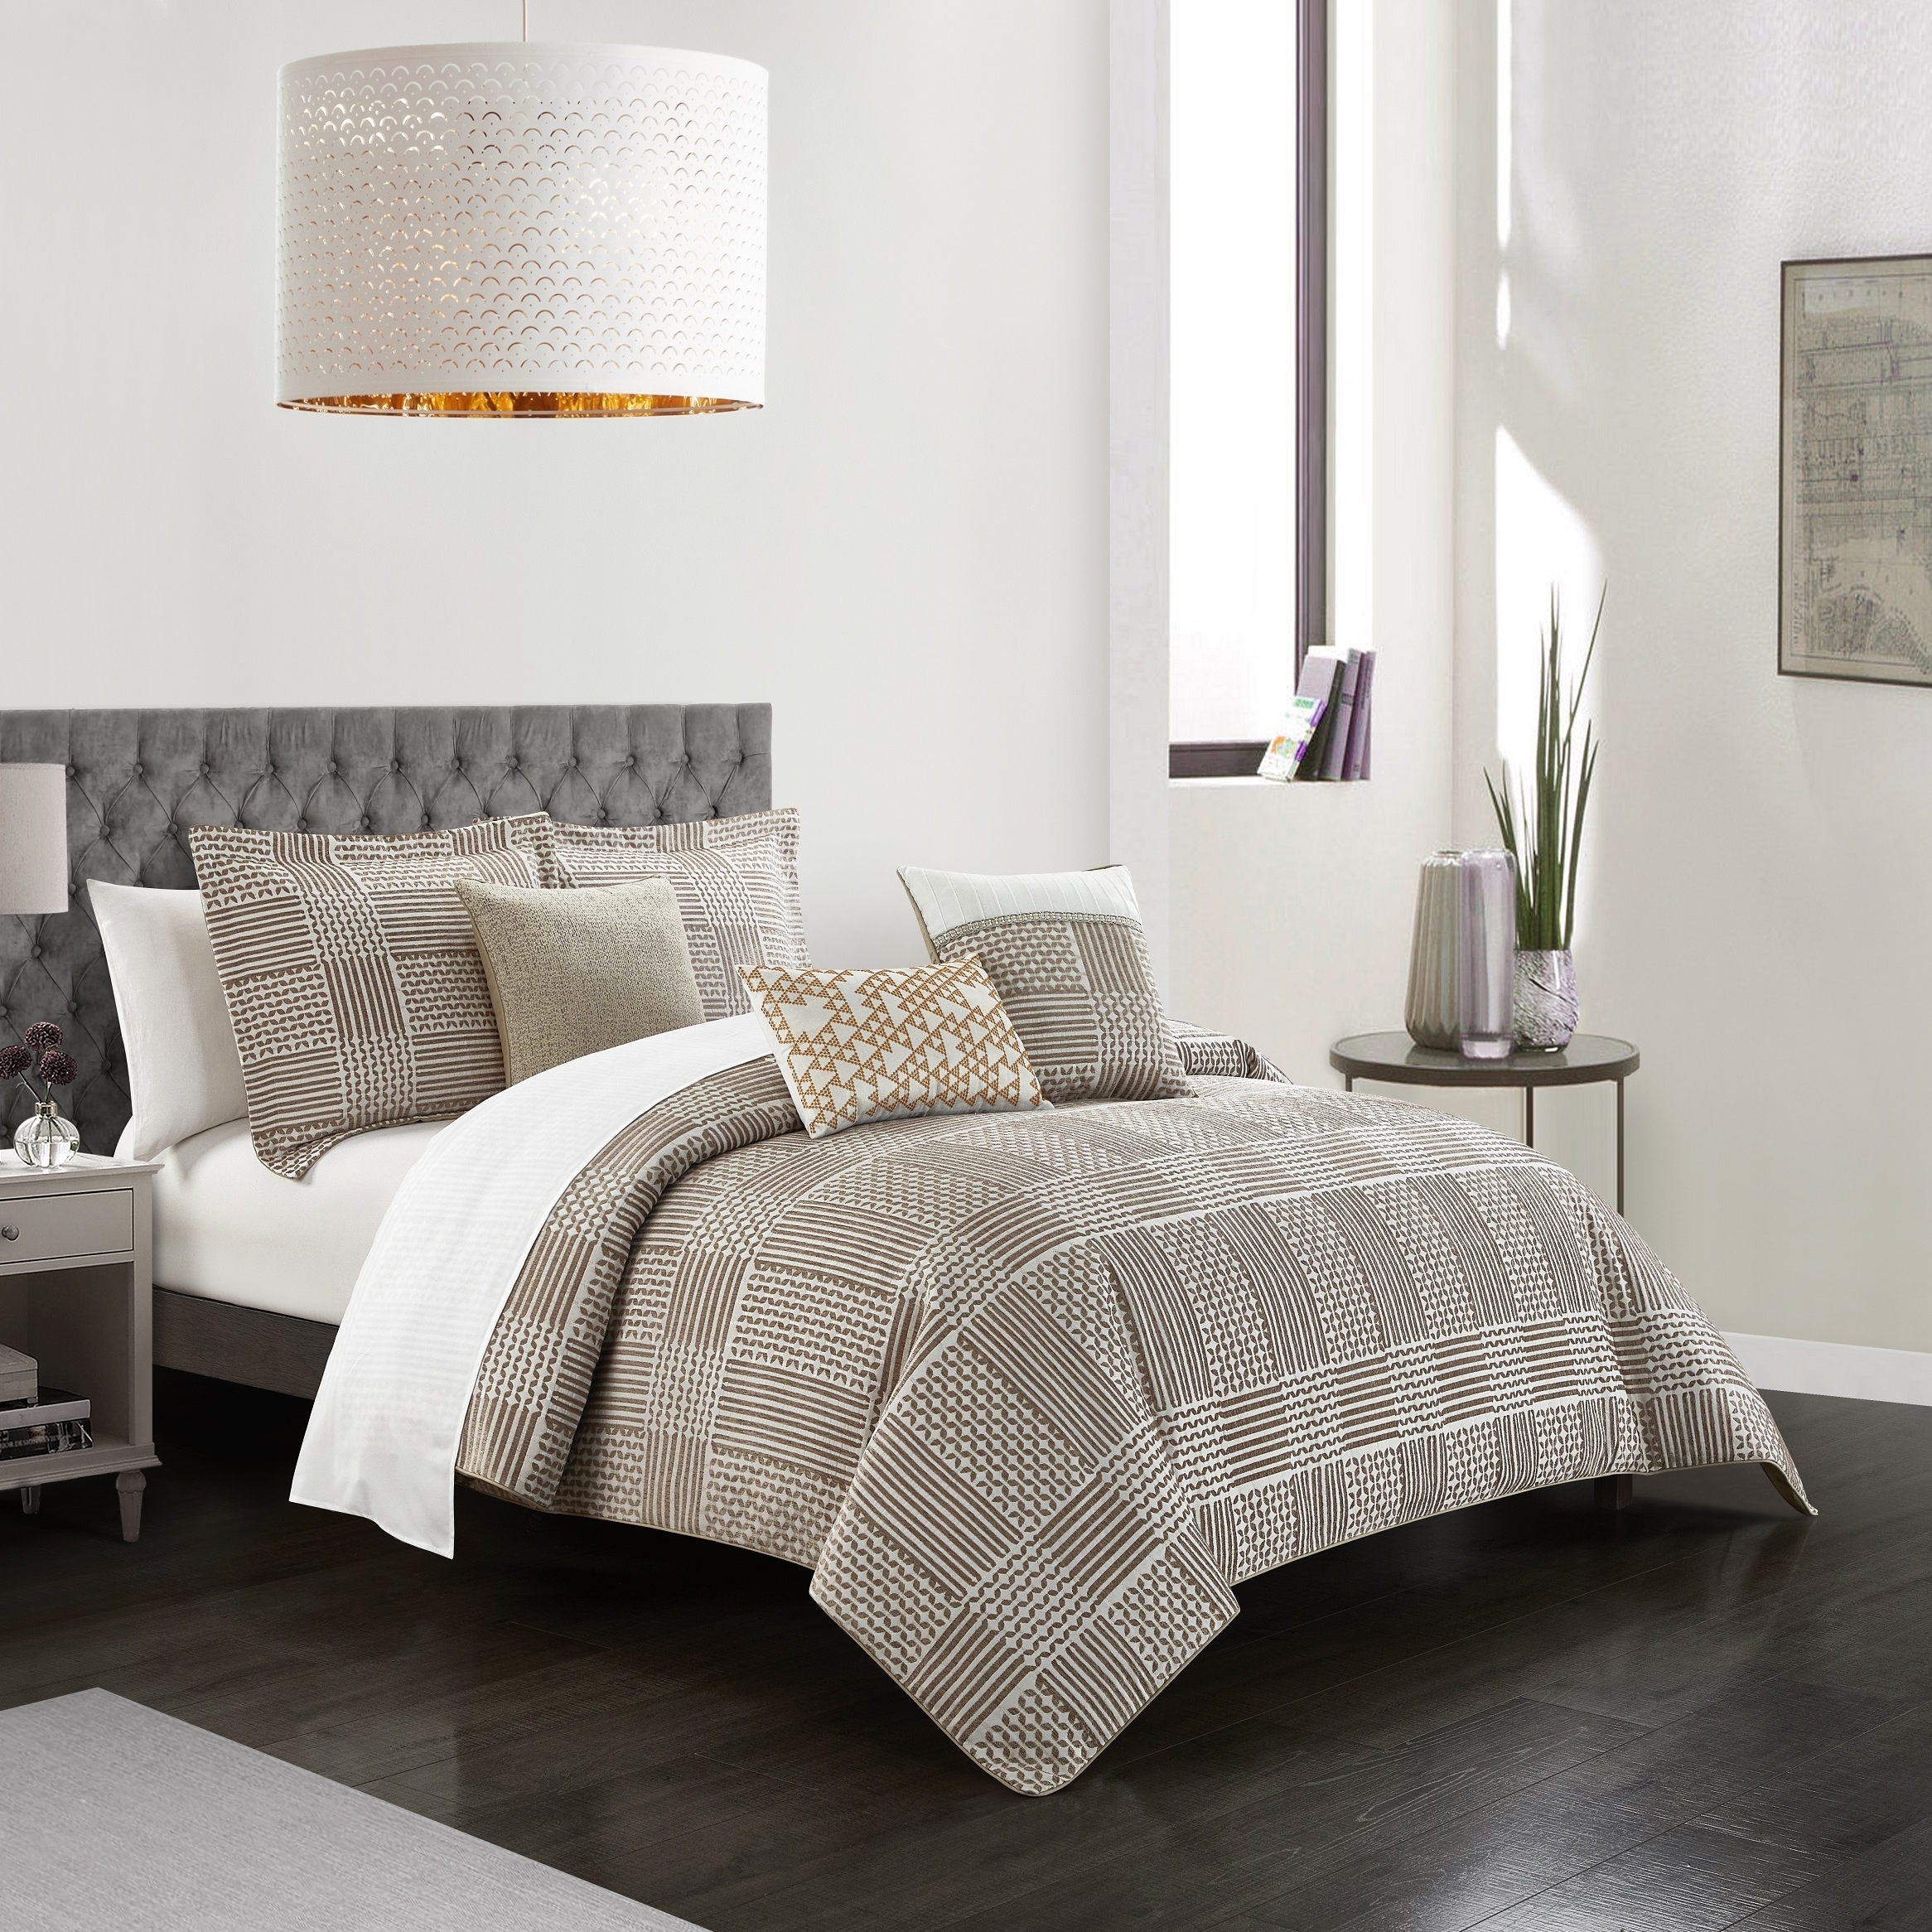 Odhi 6 Or 10 Piece Comforter Set Chenille Geometric Pattern Design Bedding - Beige, King